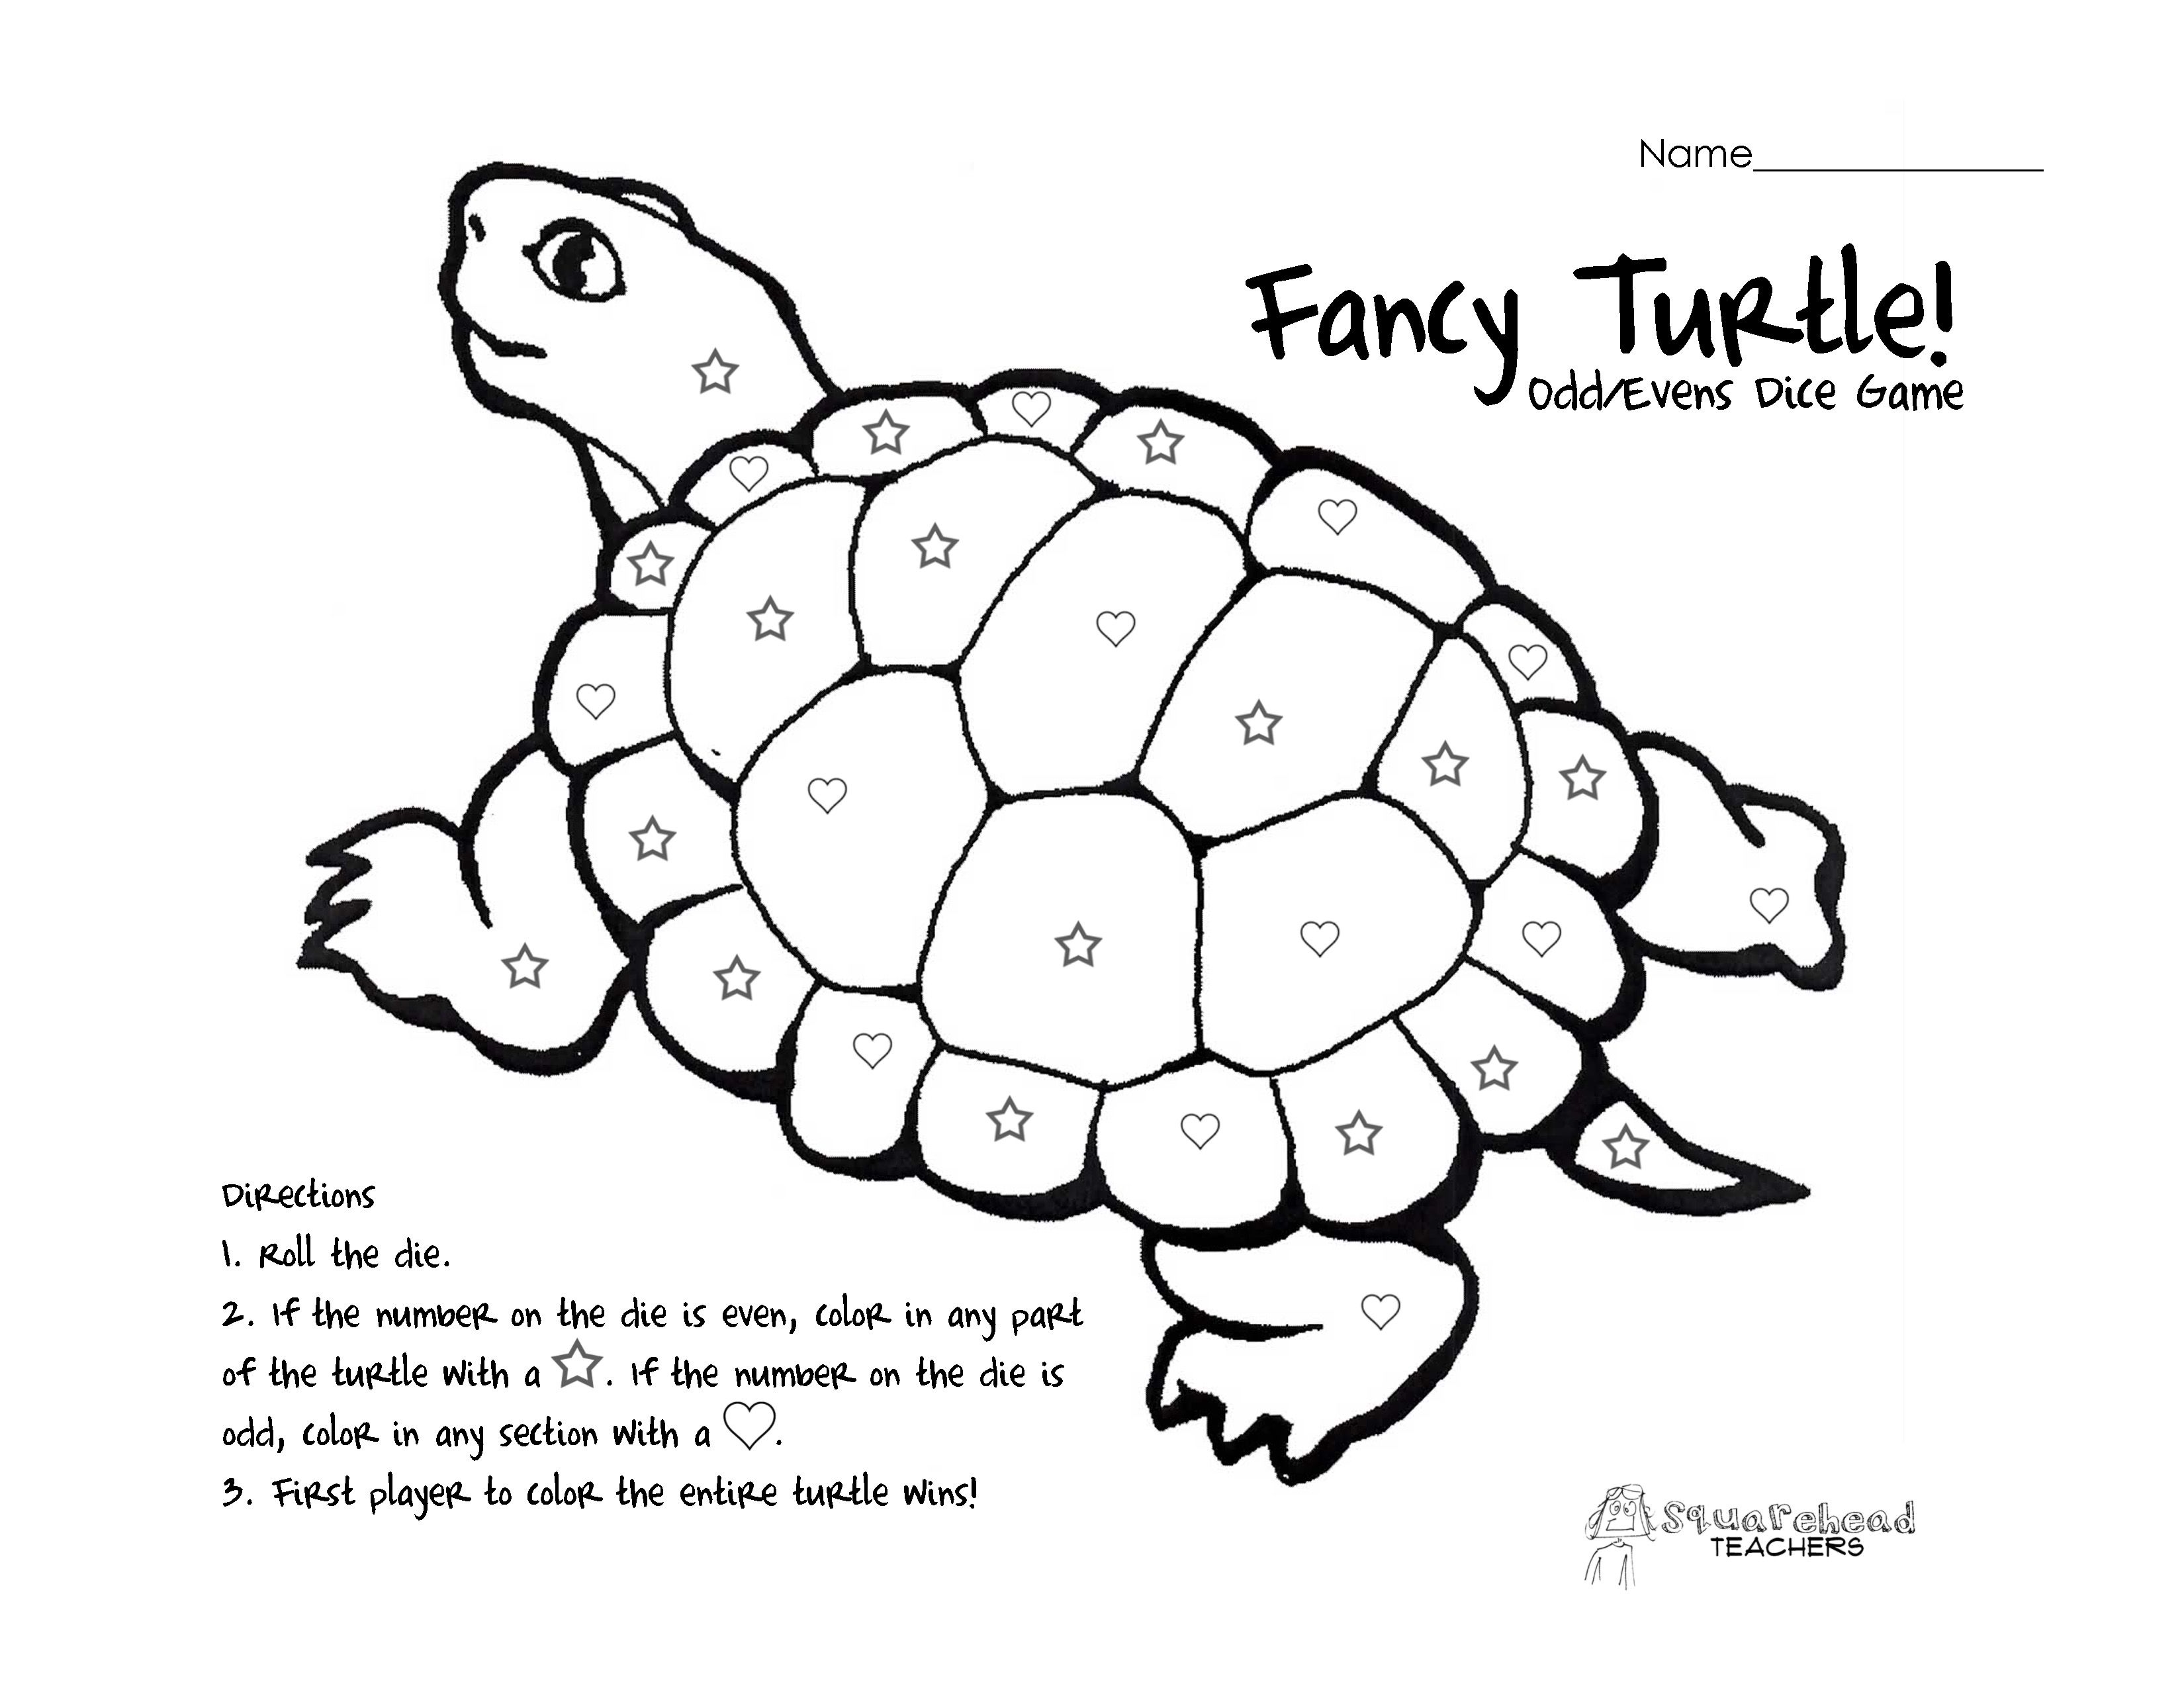 Fancy Turtle! (Odd/Evens Dice Game) | Squarehead Teachers